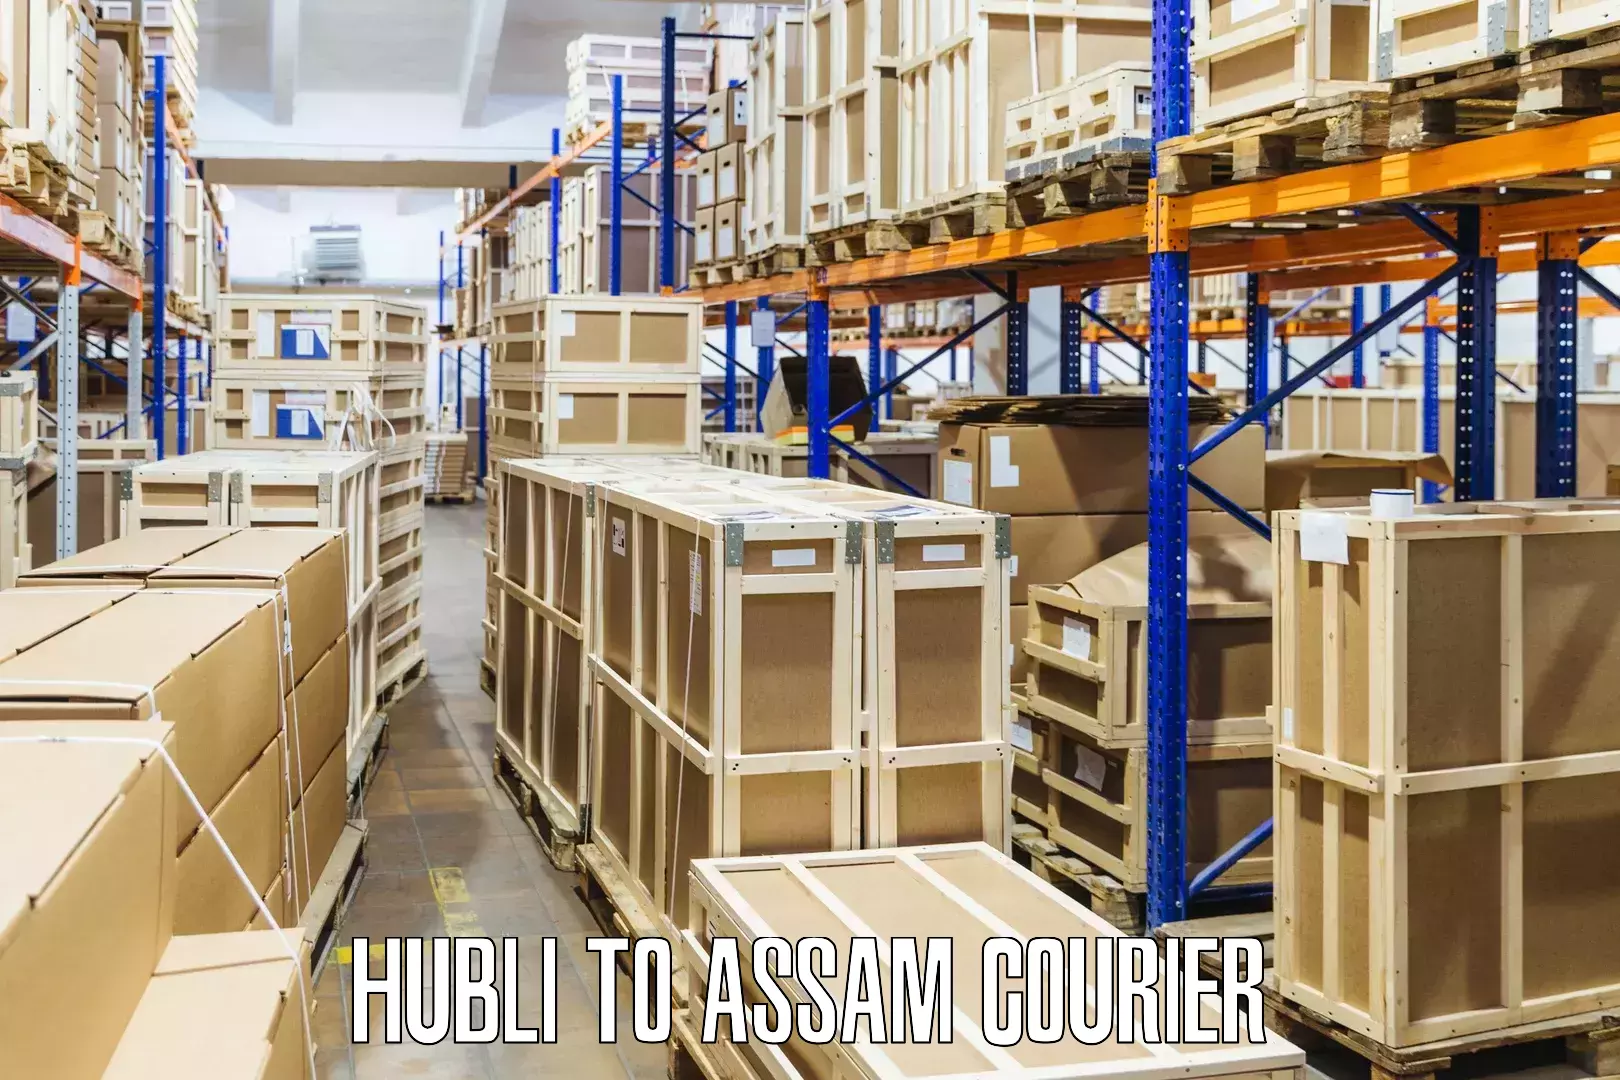 Courier service comparison Hubli to IIT Guwahati